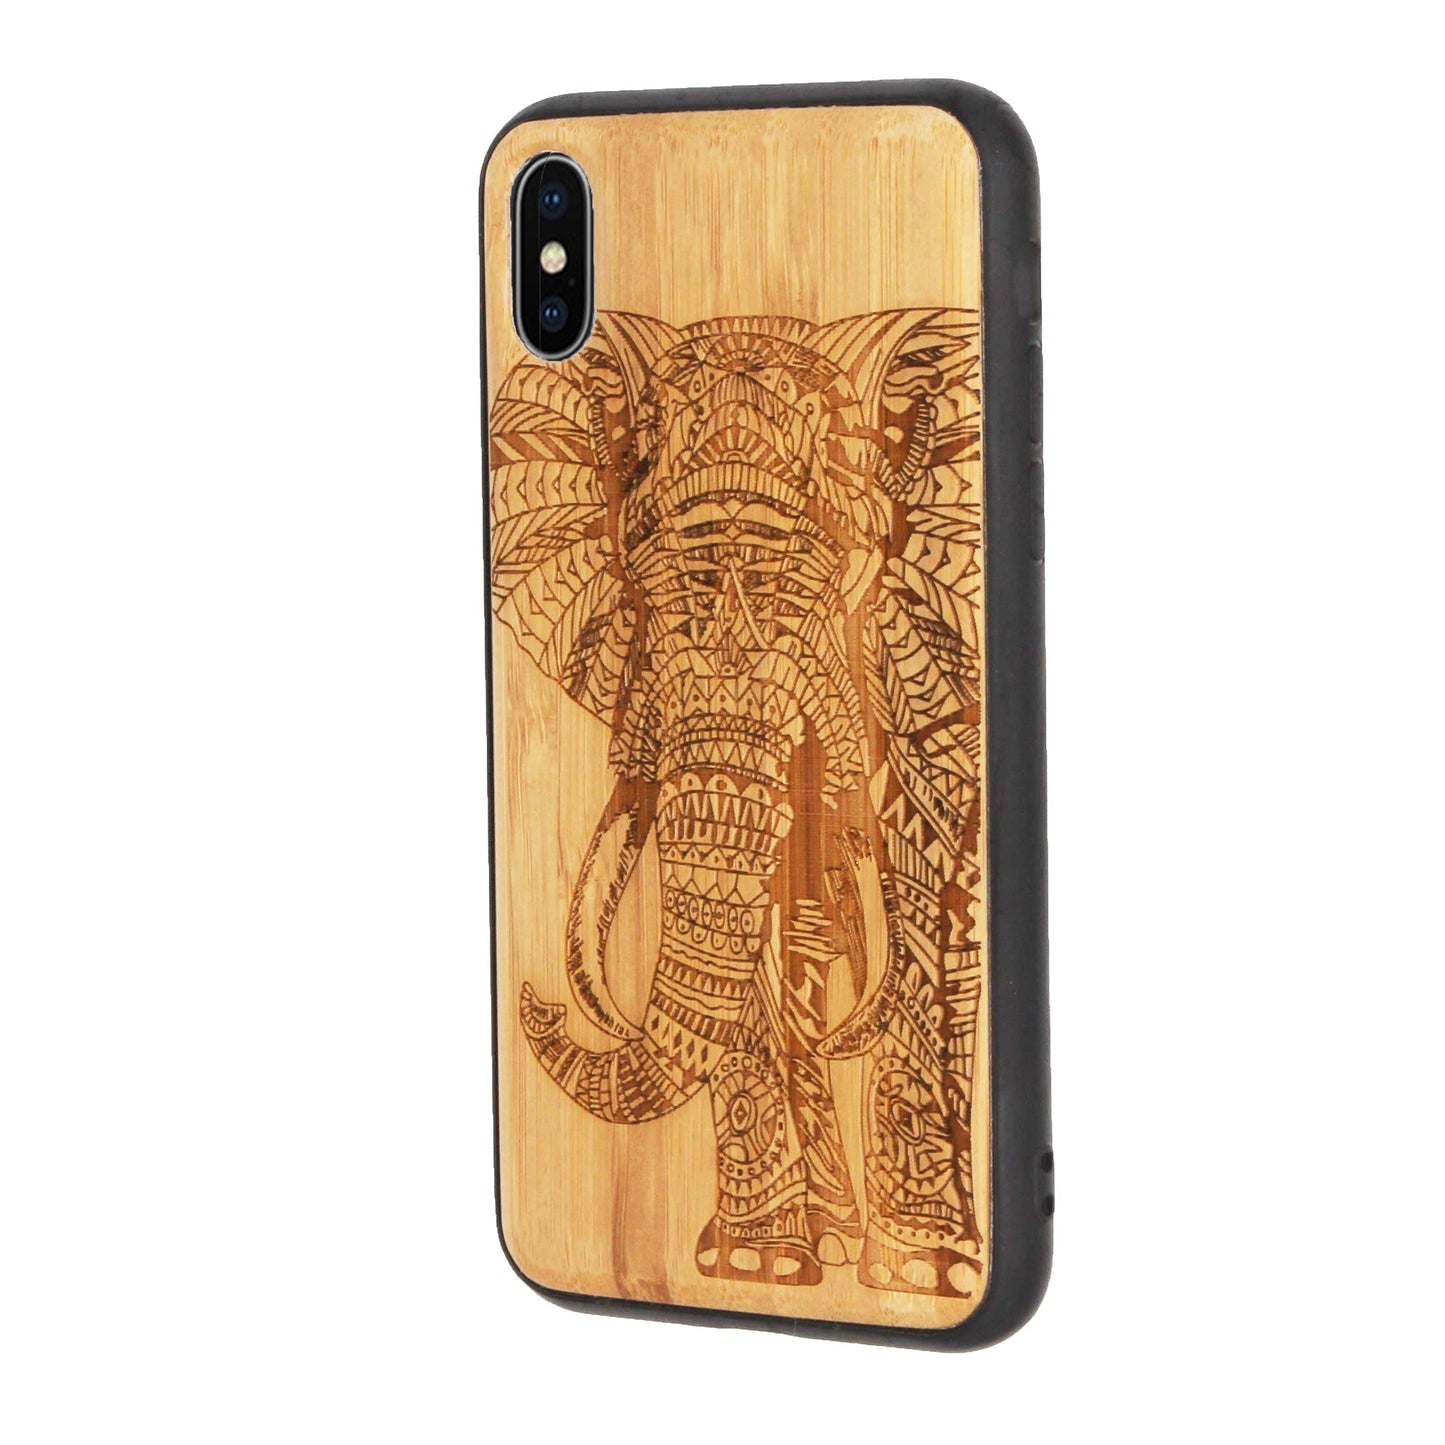 Elefant Eden Case aus Bambus für iPhone XS Max